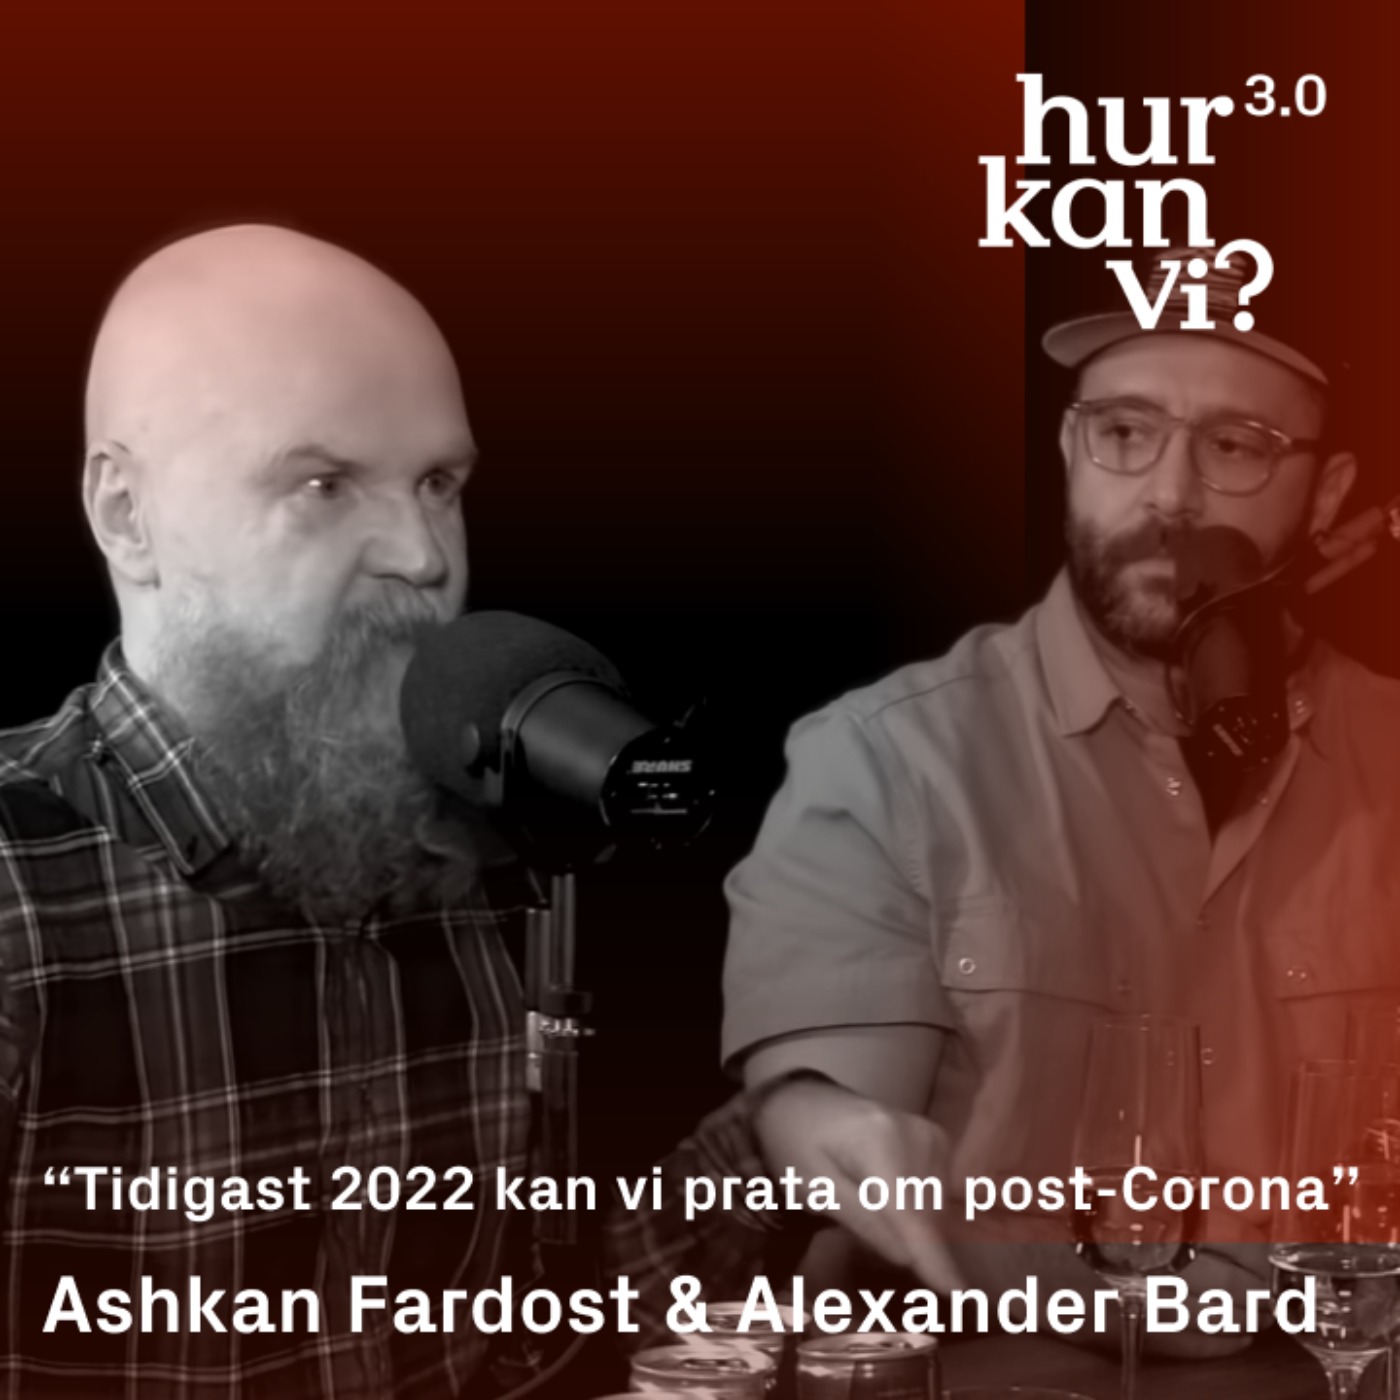 Alexander Bard & Ashkan Fardost - “Tidigast 2022 kan vi prata om post-Corona”